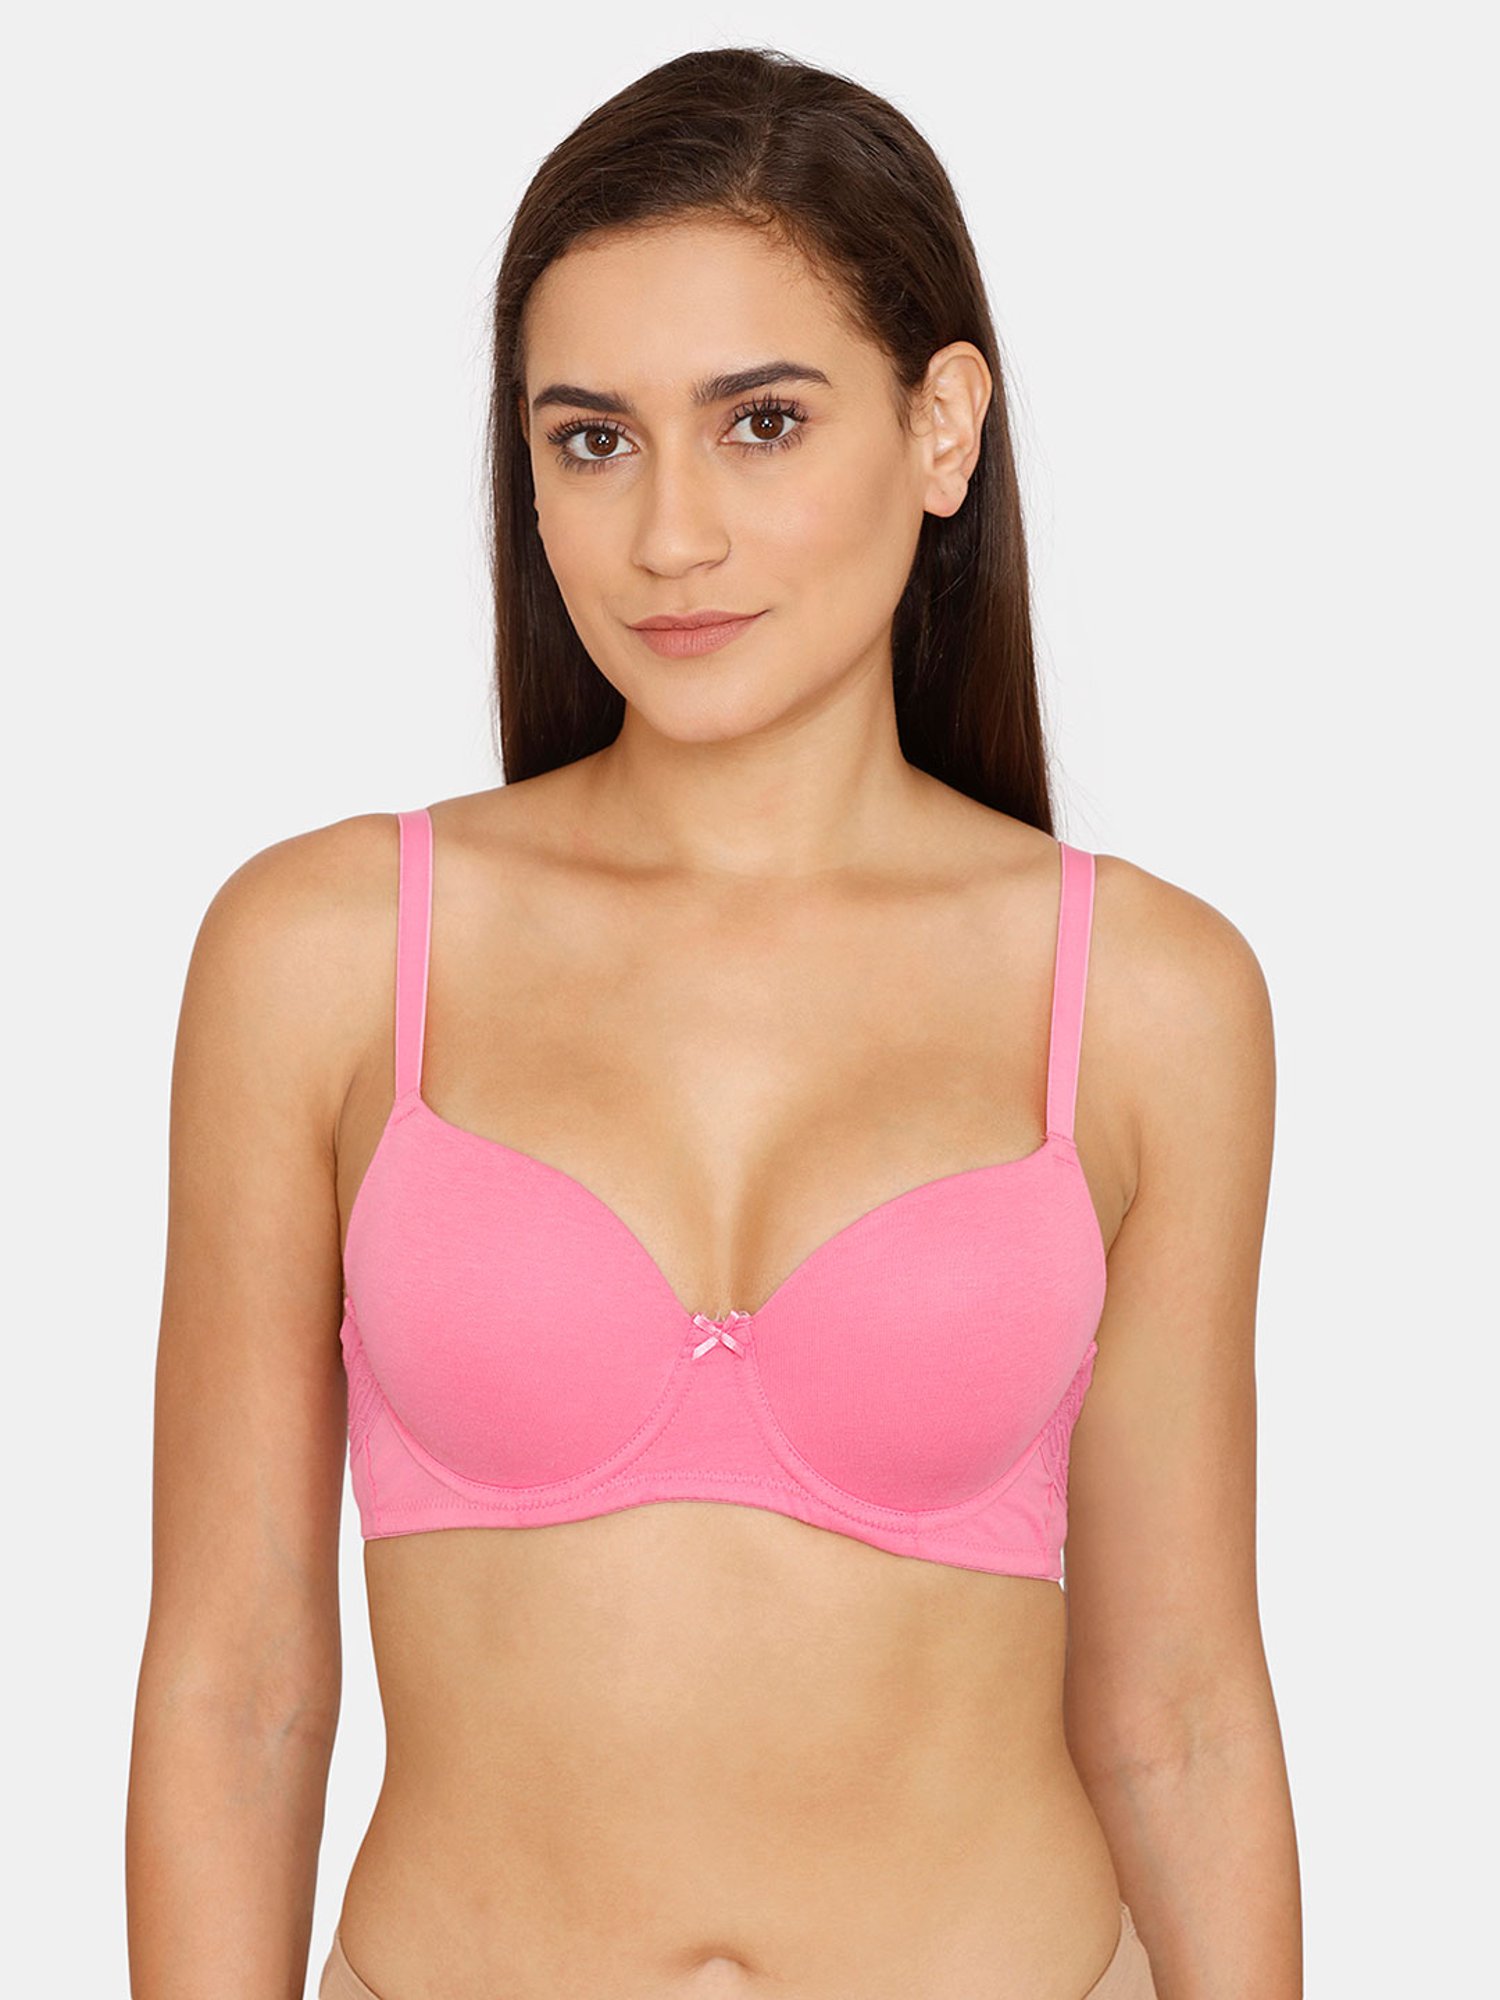 Buy Zivame Pink Under wired Padded T Shirt Bra for Women Online @ Tata CLiQ